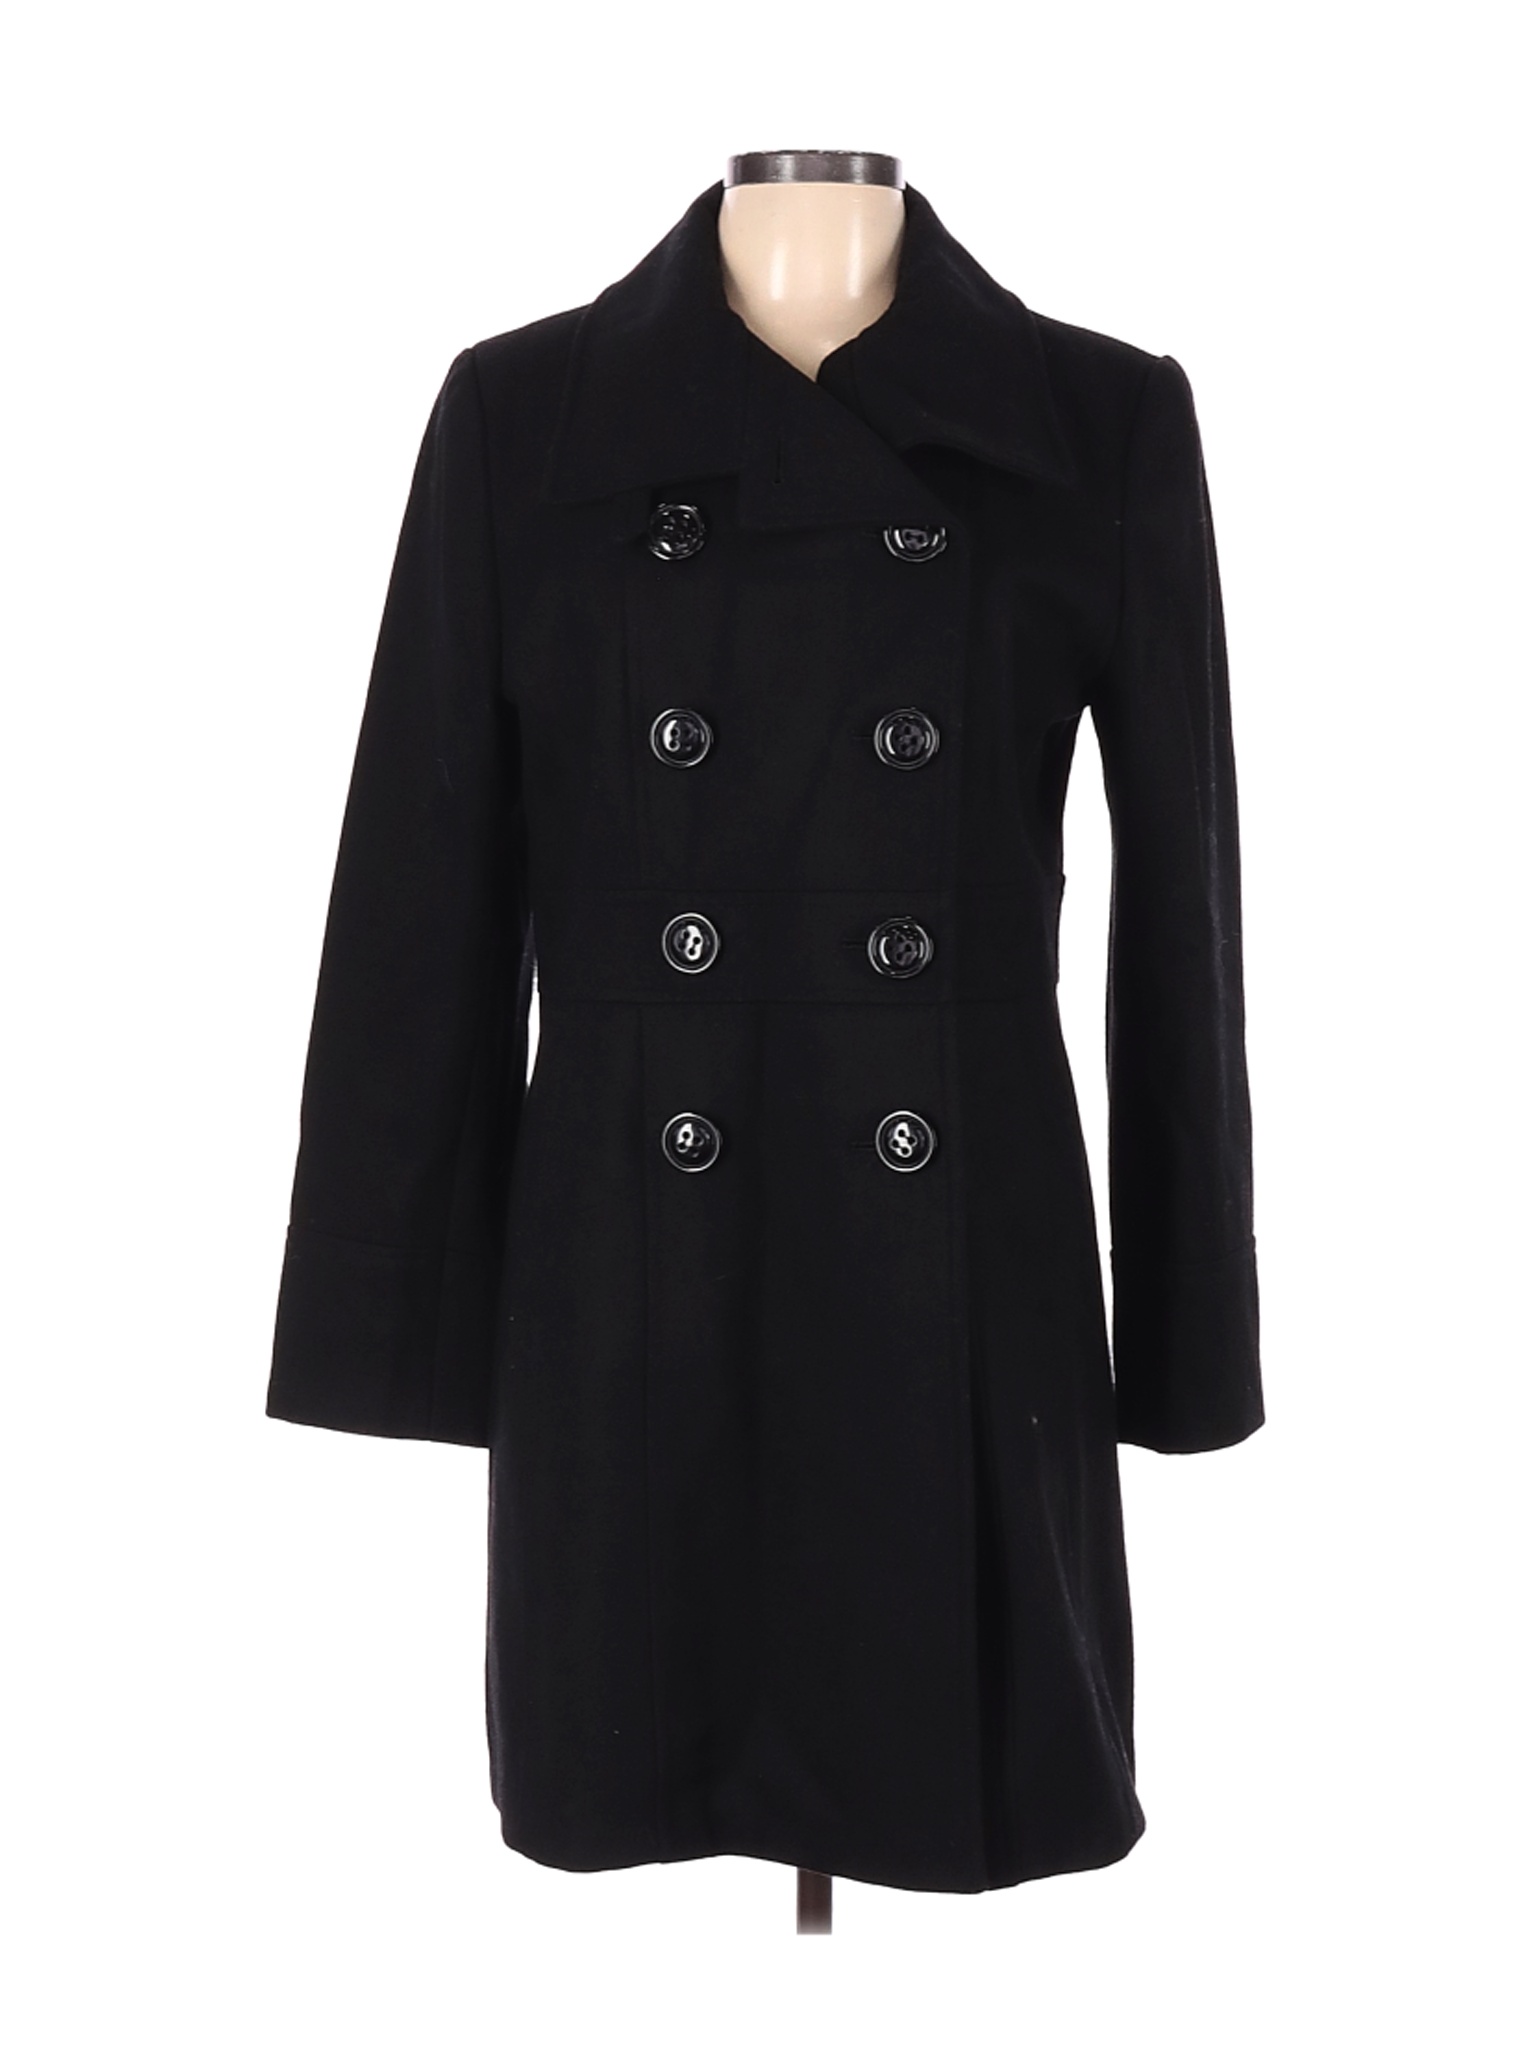 Giacca Women Black Wool Coat L | eBay